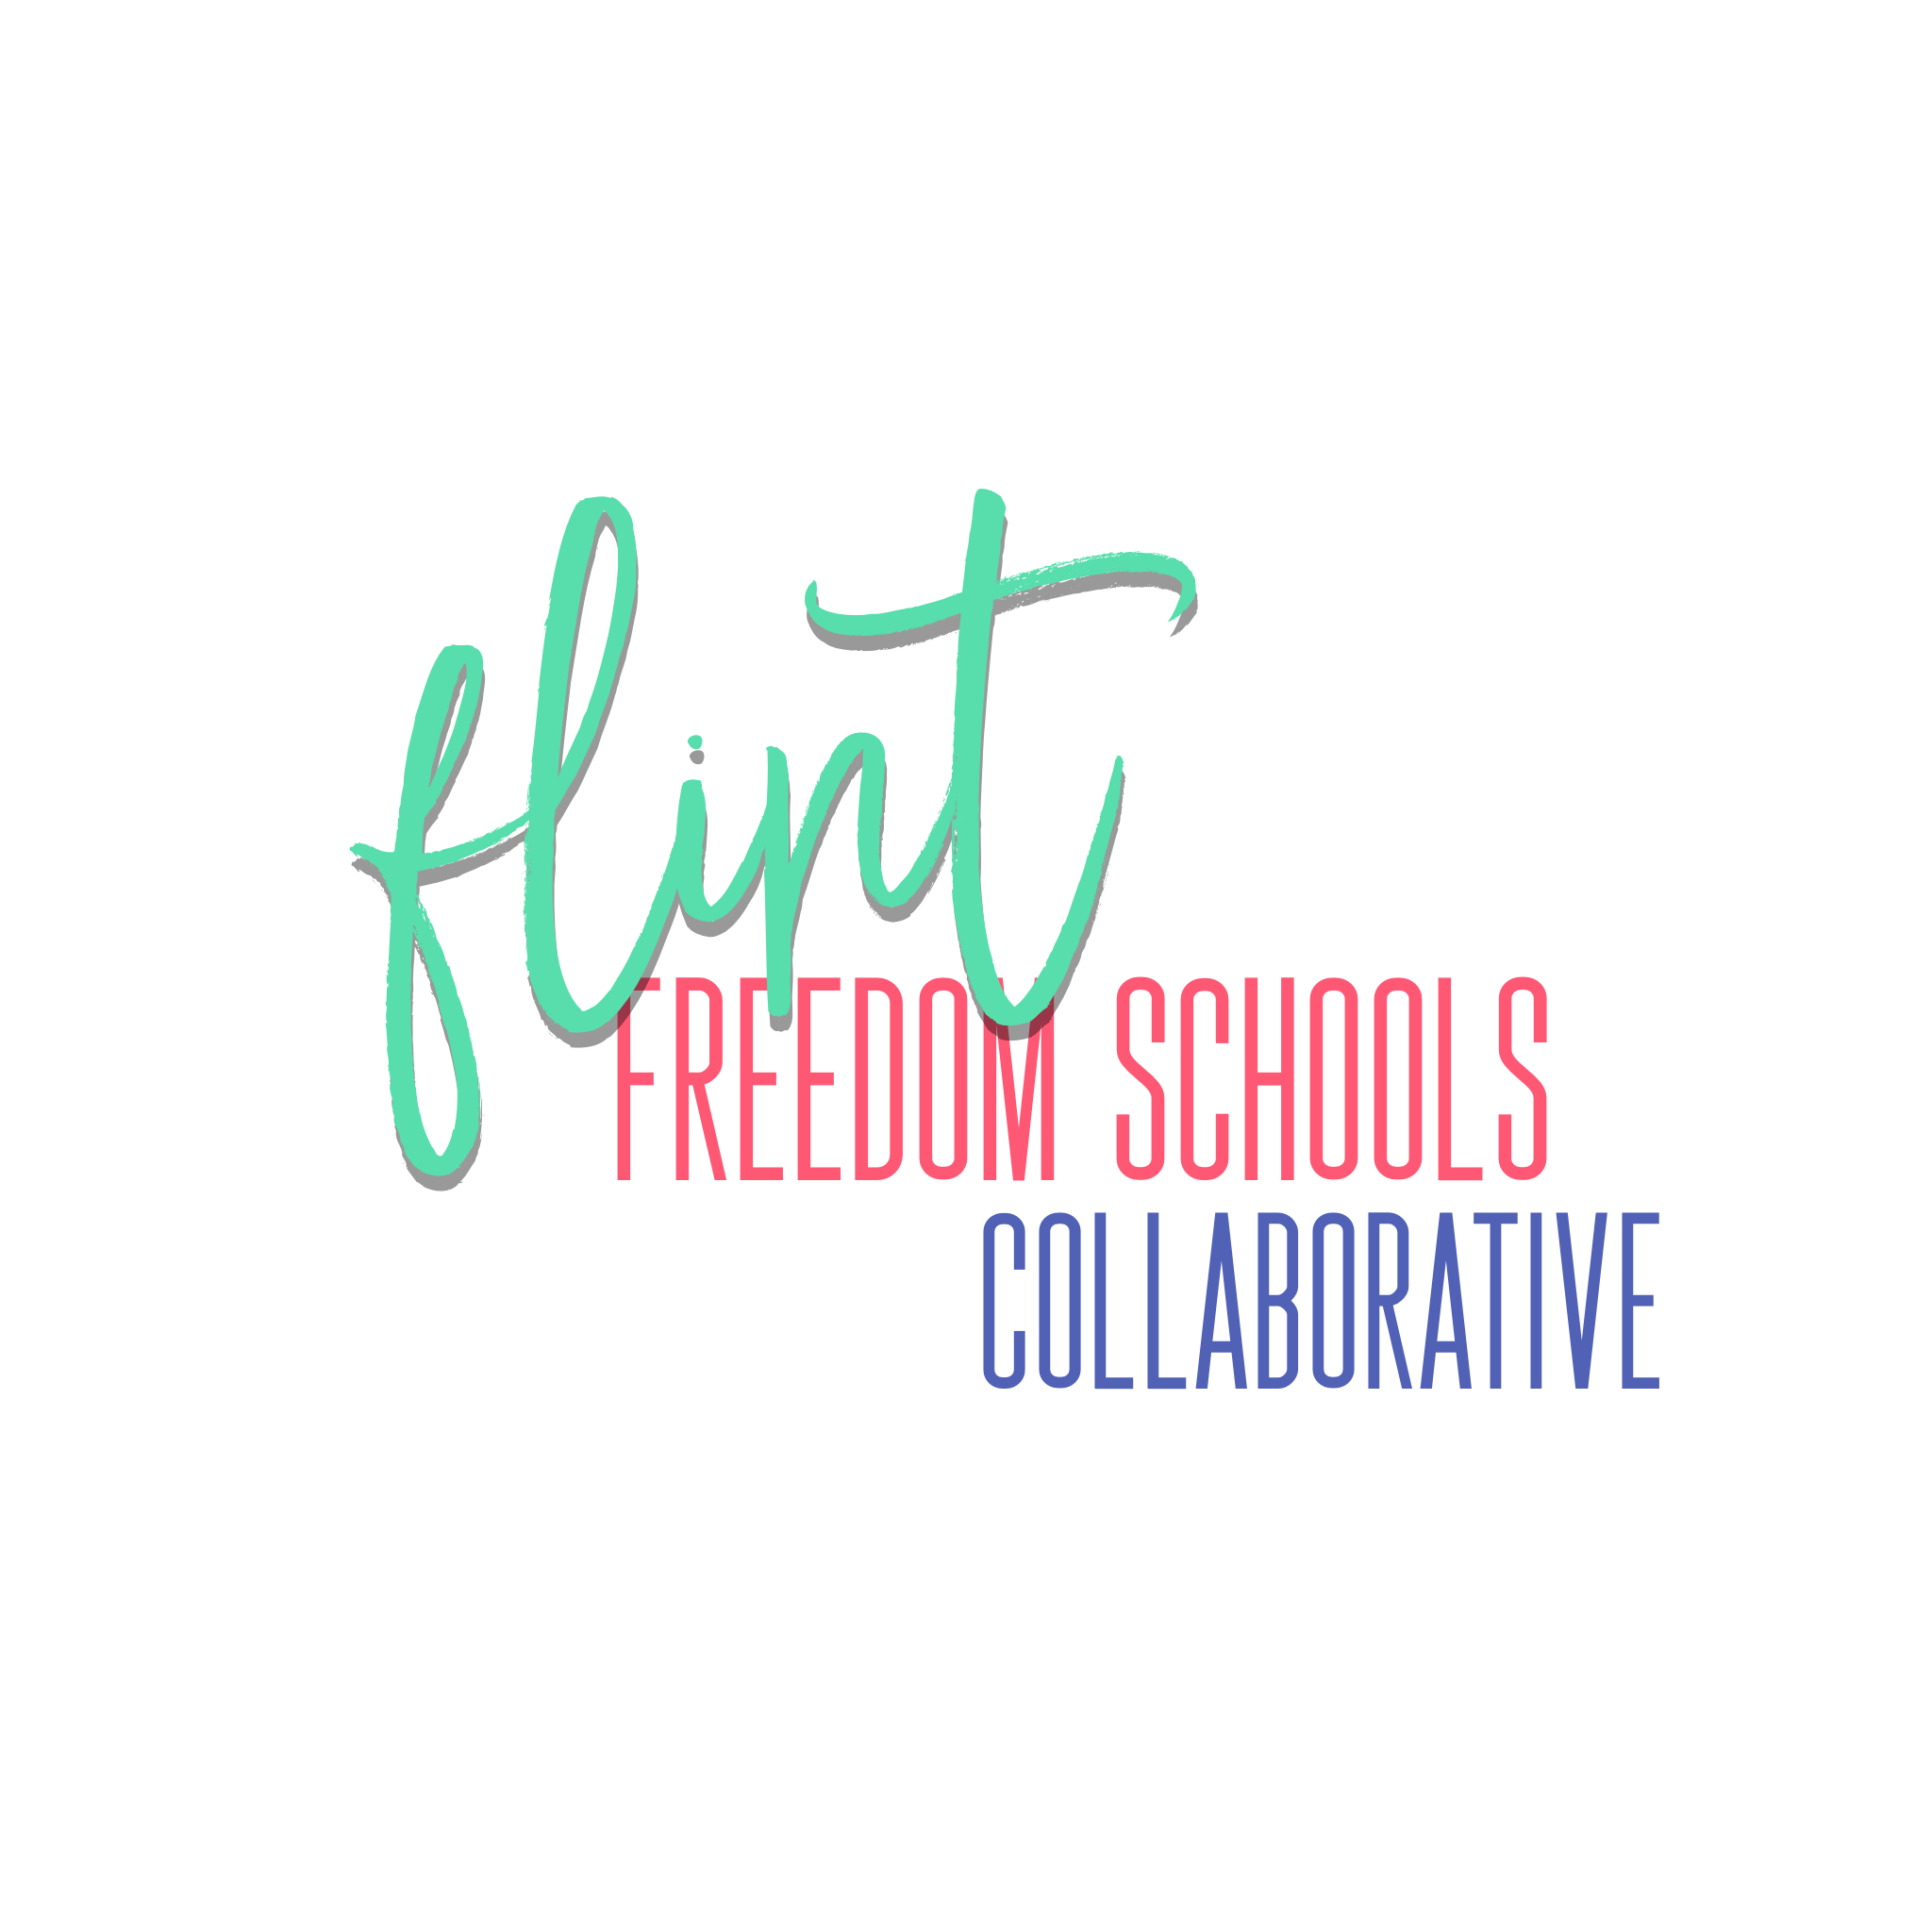 freedom schools